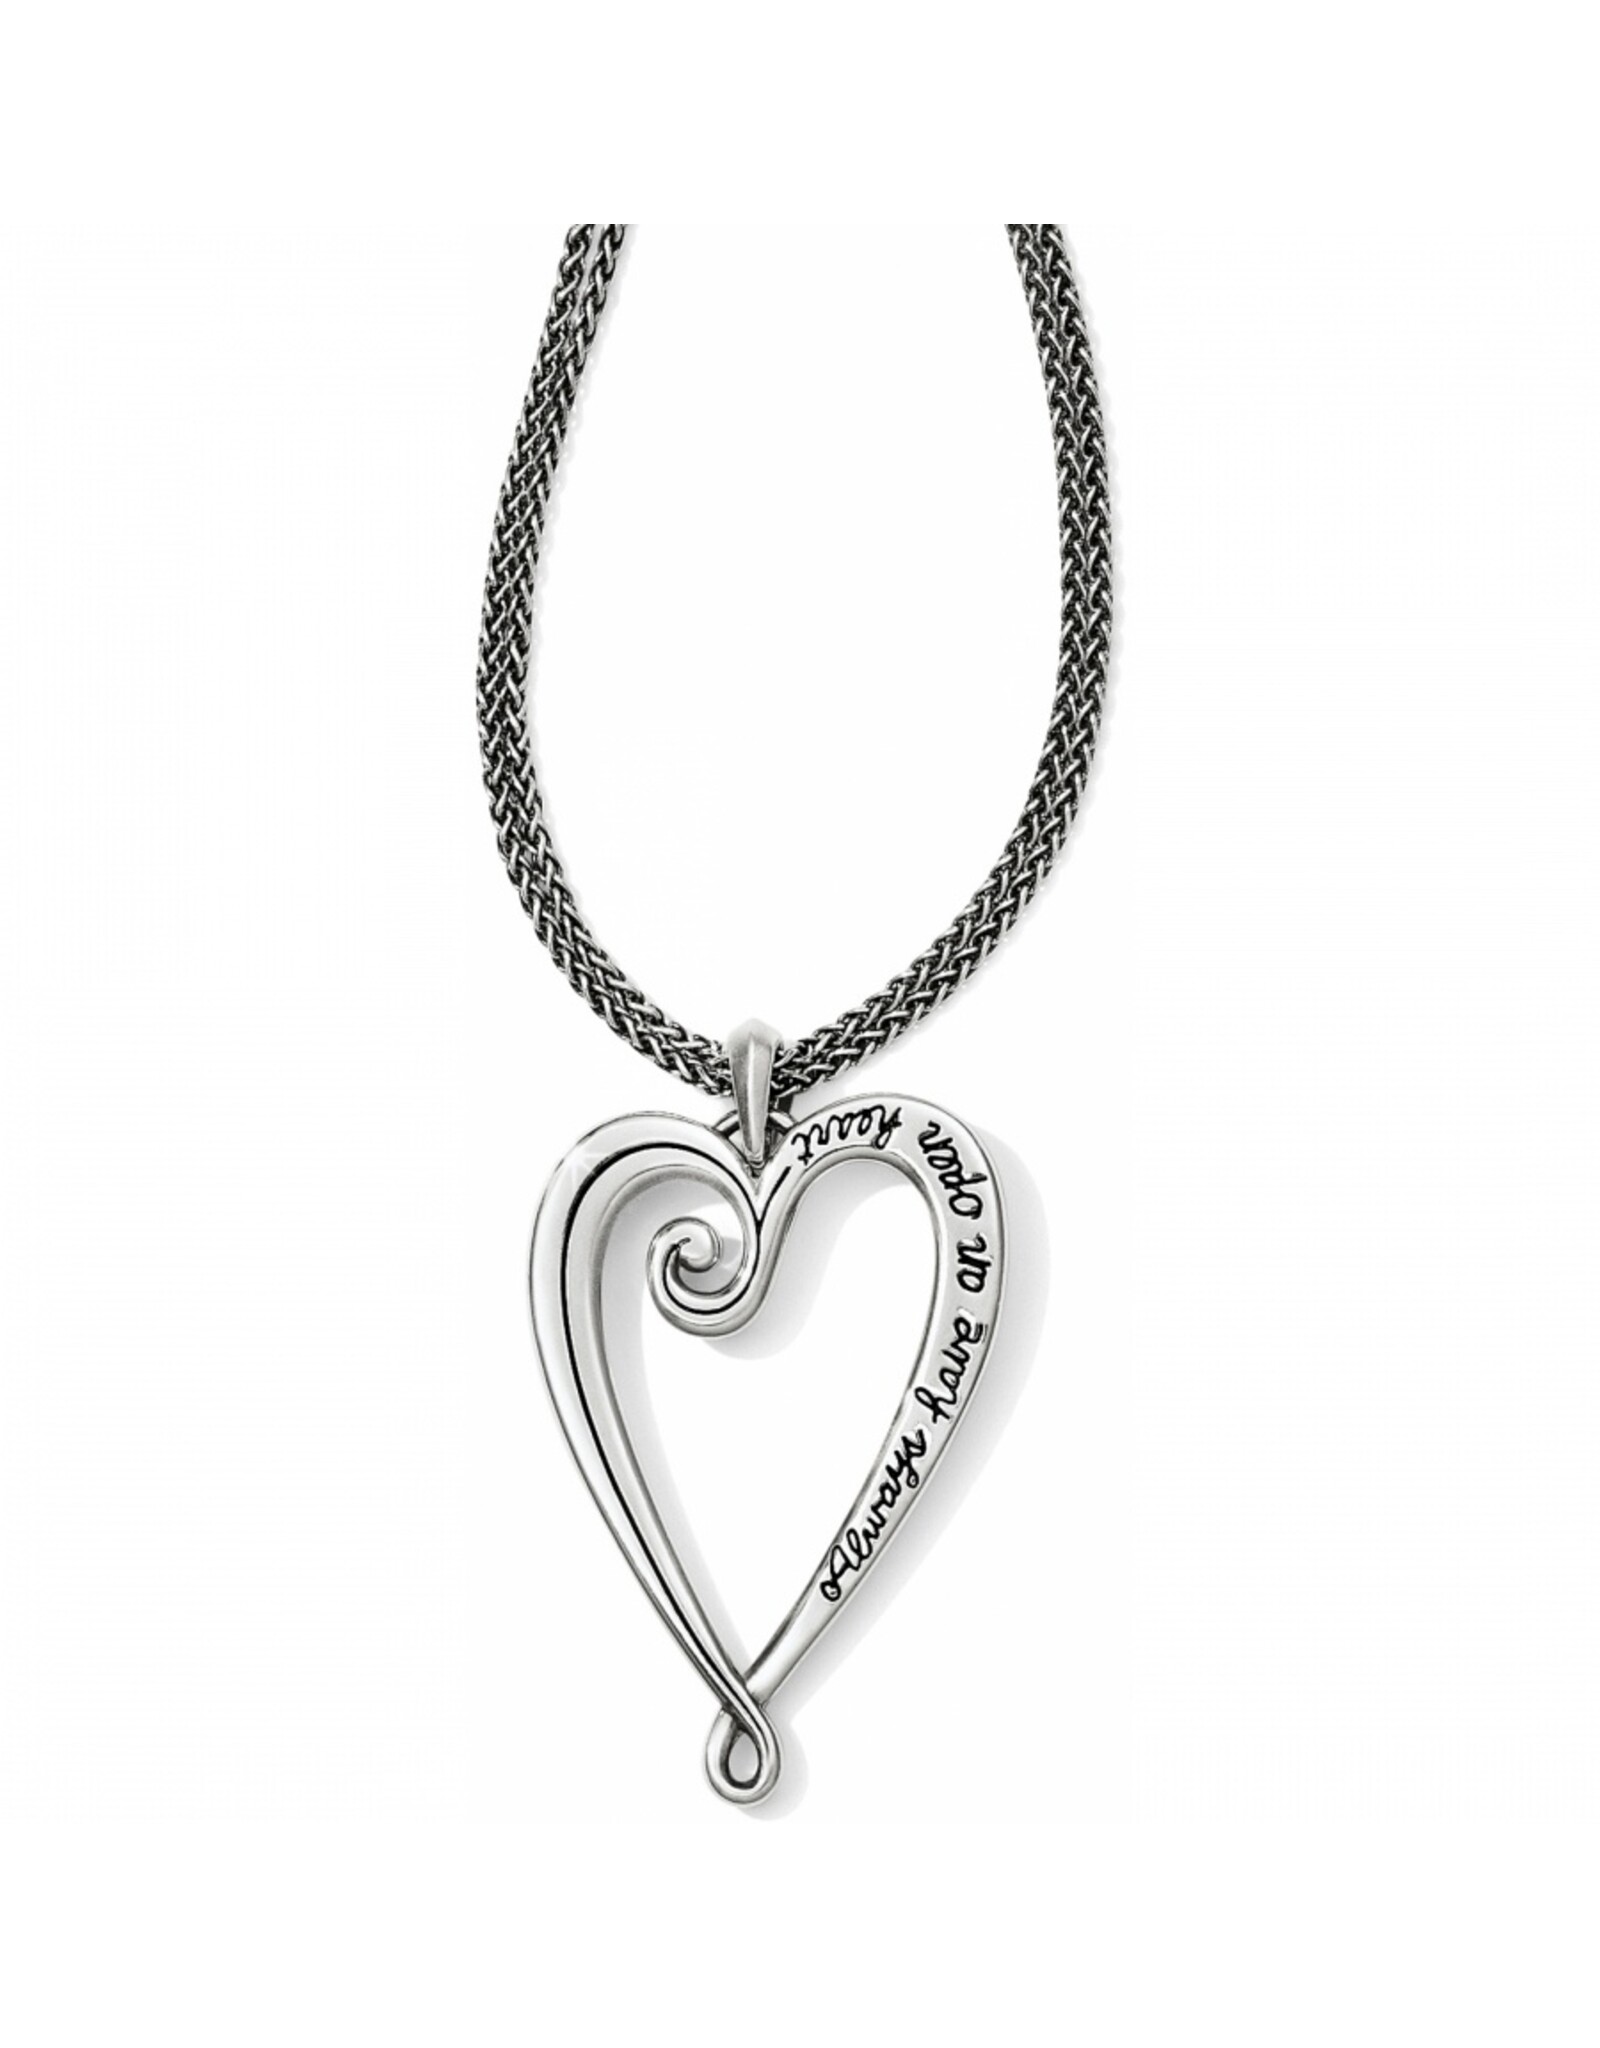 Brighton Brighton JL5020 Whimsical Heart Convertible Necklace